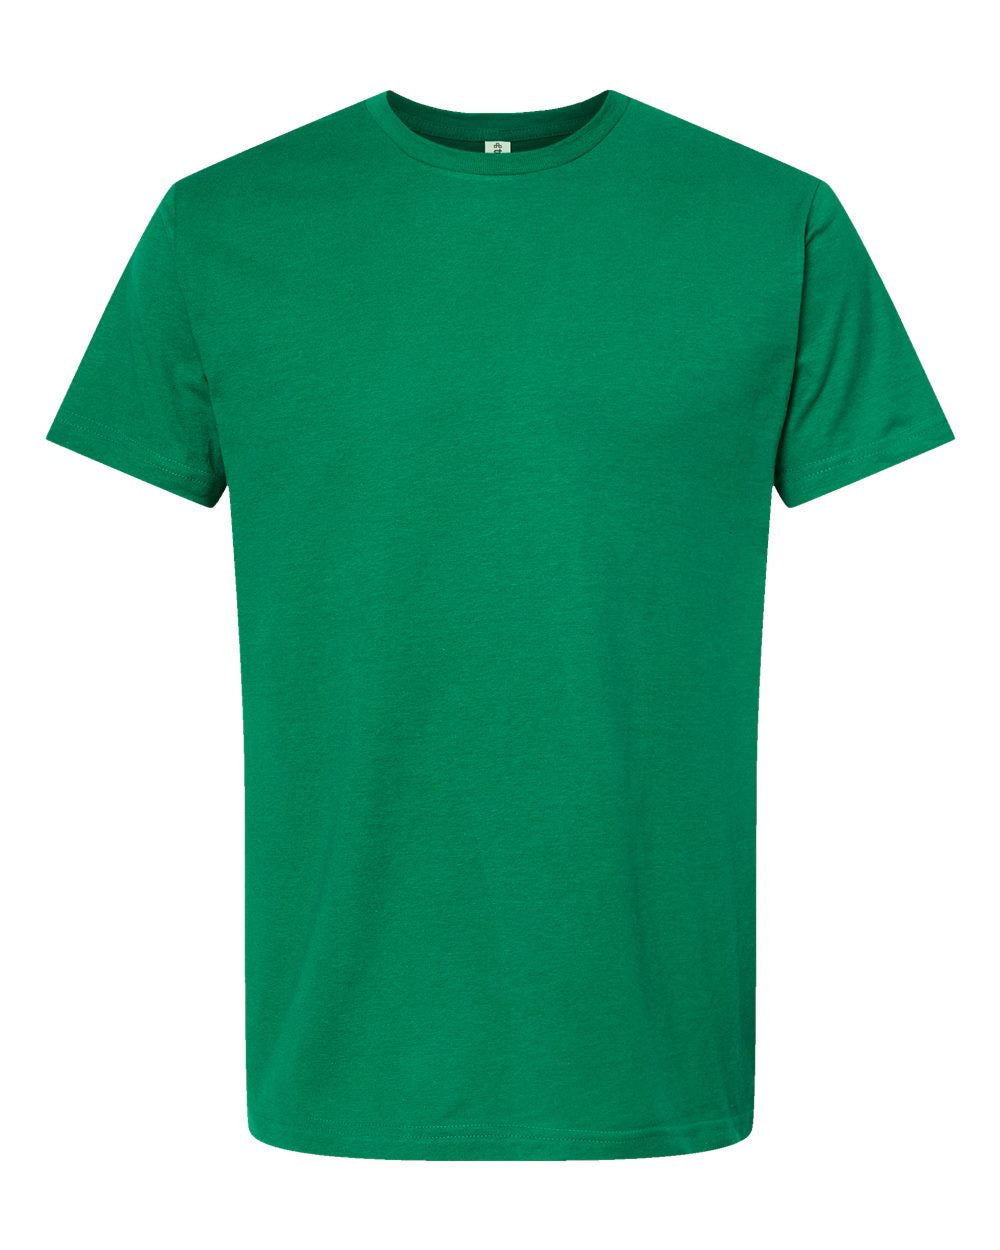 Pretreated Tultex 202 Unisex Fine Jersey T-Shirt - Kelly Green